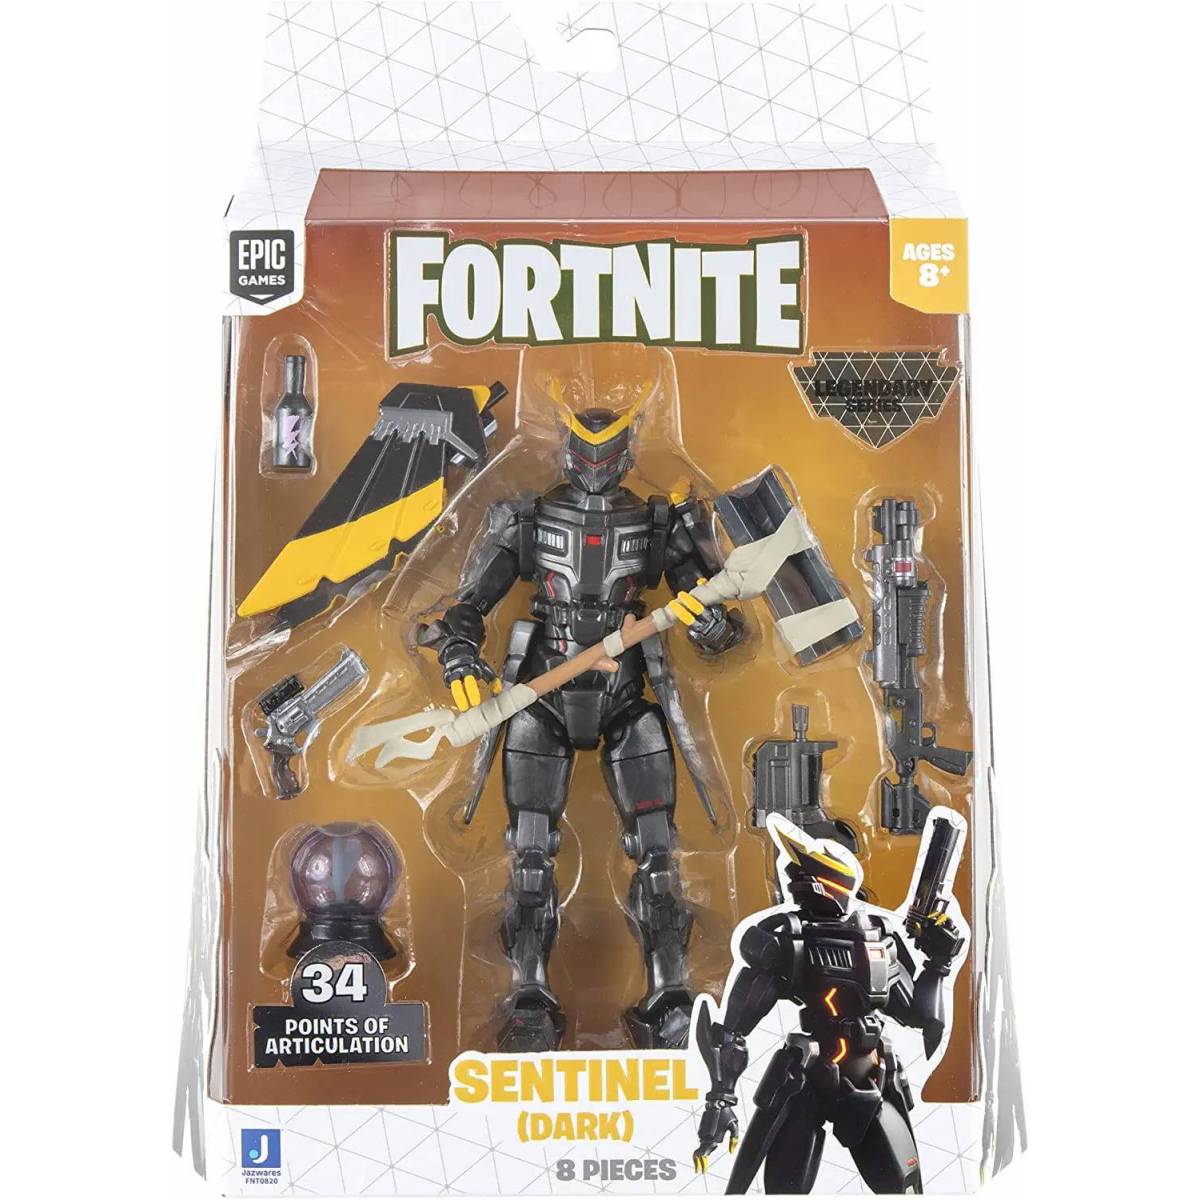 Fortnite Sentinel (DARK) Legendary Series Figure